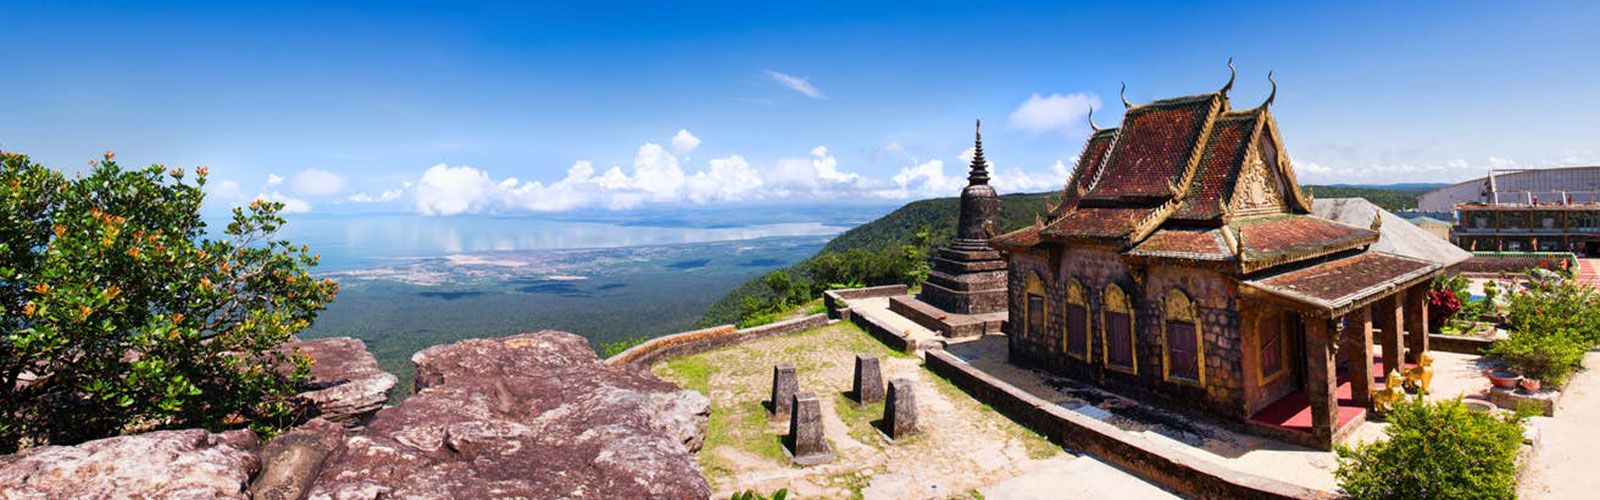 Kampot & Kep Travel Guide | Asianventure Tours